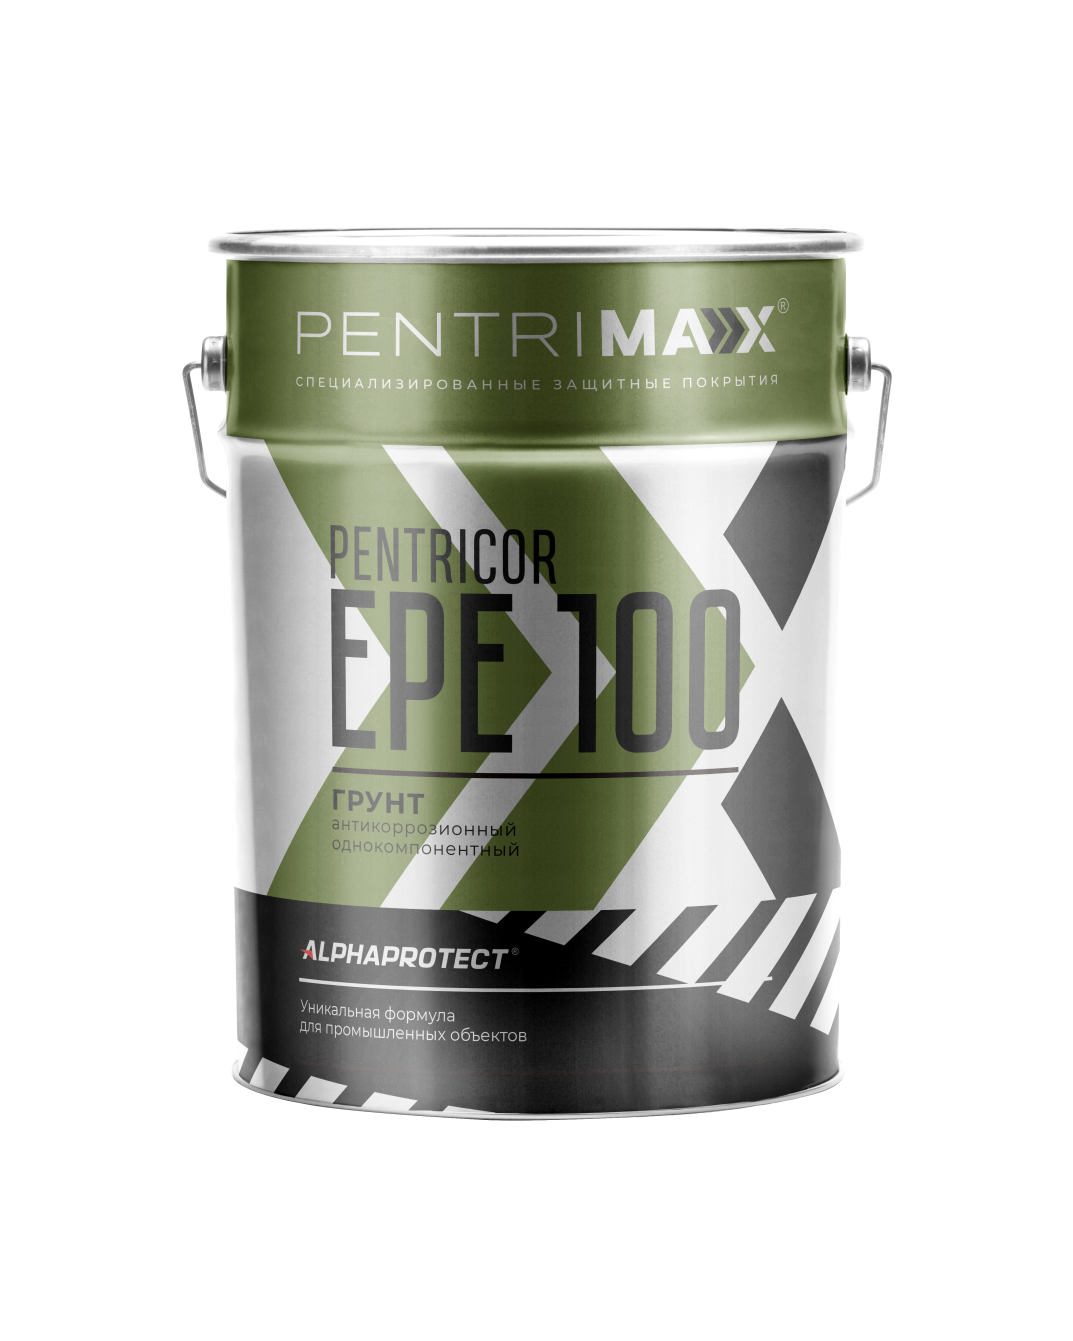 Эпоксидный грунт для металла PENTRICOR EPE 100